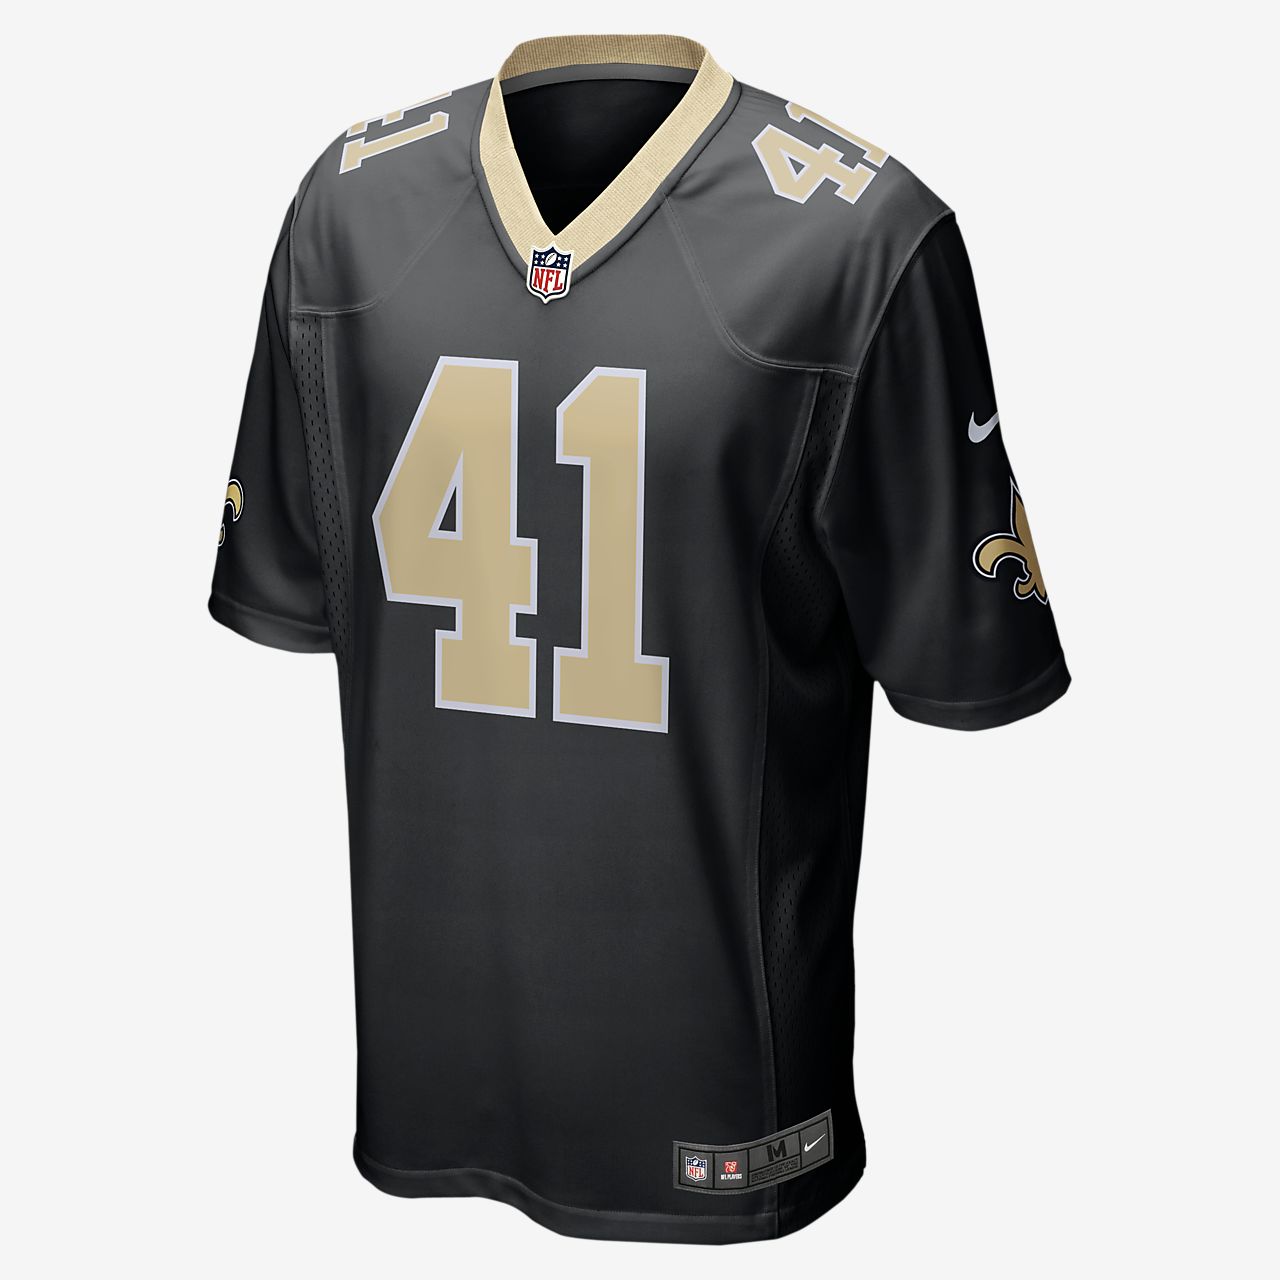 NFL New Orleans Saints Game Jersey (Alvin Kamara) Men's Football Jersey. Nike.com